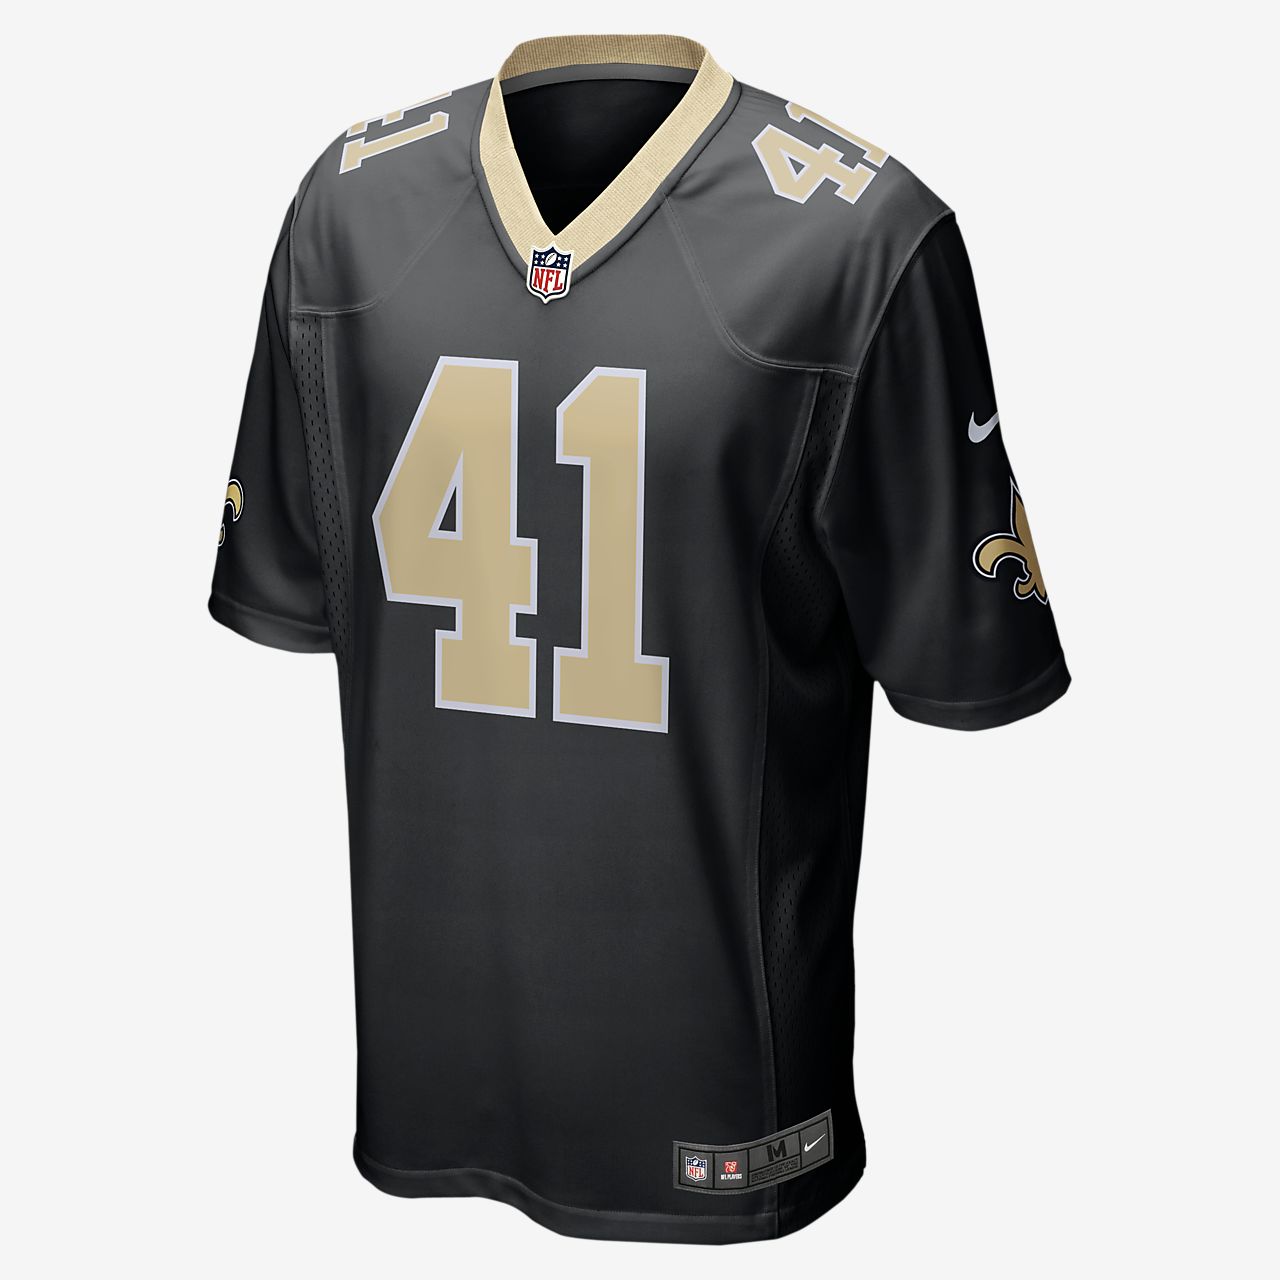 NFL New Orleans Saints Game Jersey (Alvin Kamara) Men's Football Jersey. Nike.com